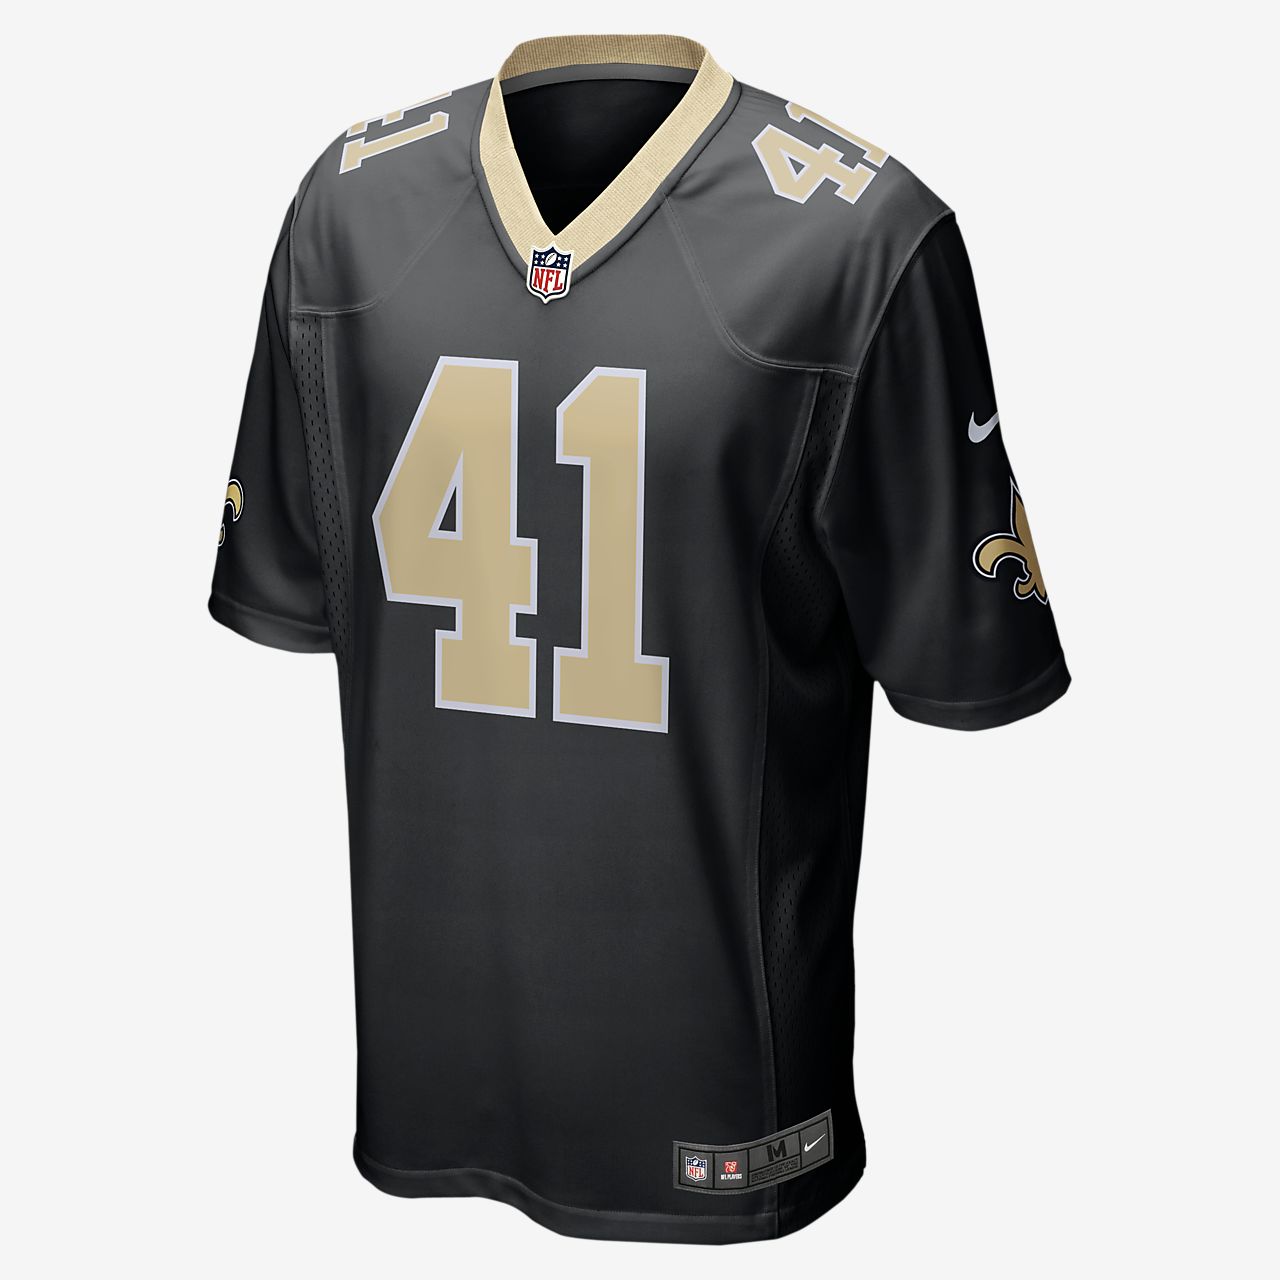 NFL New Orleans Saints Game Jersey (Alvin Kamara) Men's Football Jersey. Nike.com